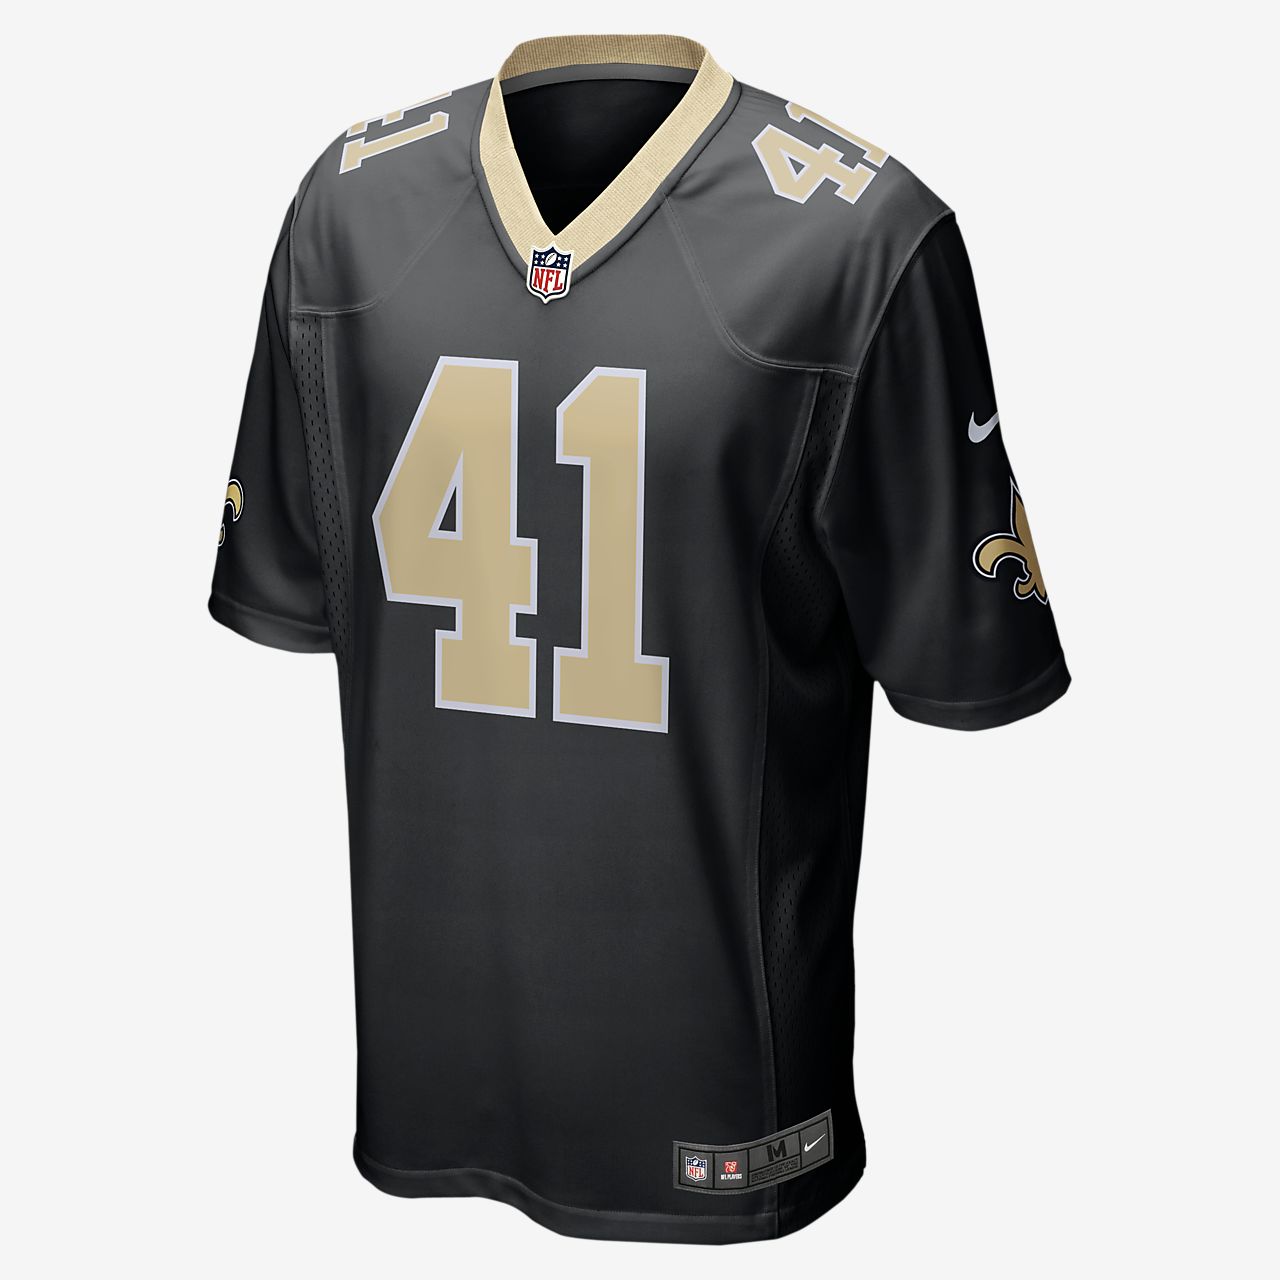 NFL New Orleans Saints Game Jersey (Alvin Kamara) Men's Football Jersey. Nike.com